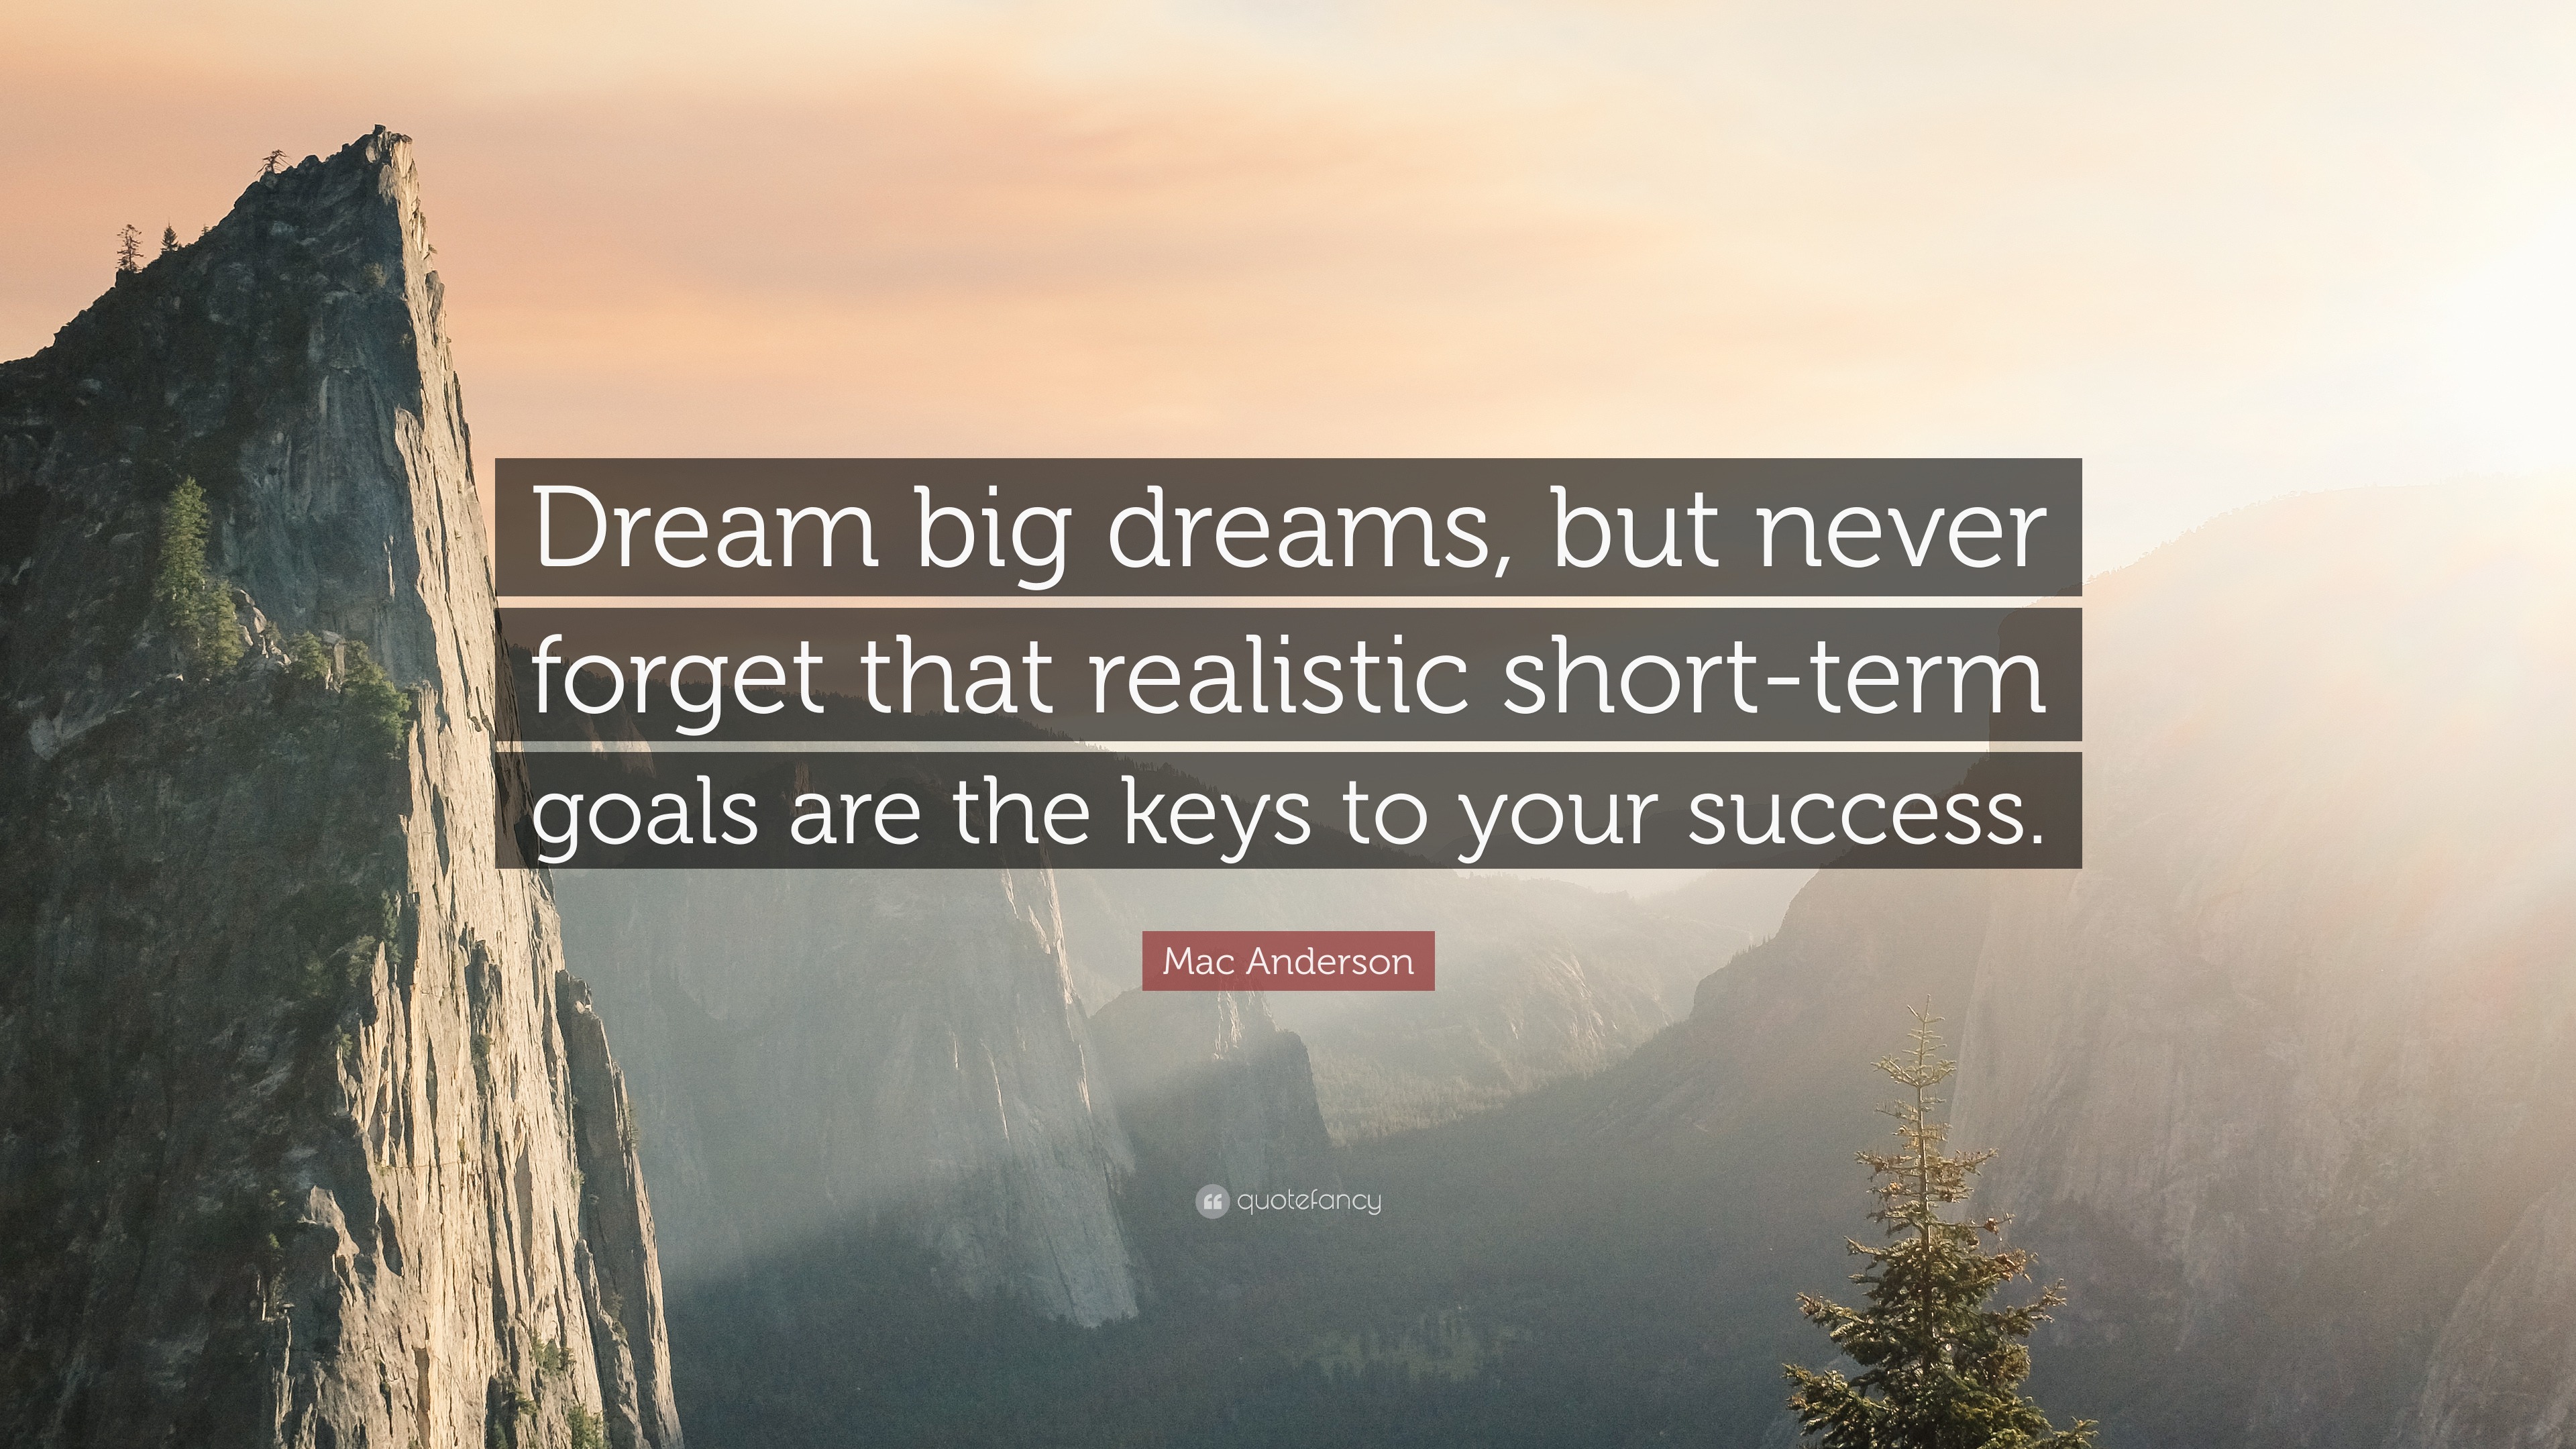 https://quotefancy.com/media/wallpaper/3840x2160/4726325-Mac-Anderson-Quote-Dream-big-dreams-but-never-forget-that.jpg